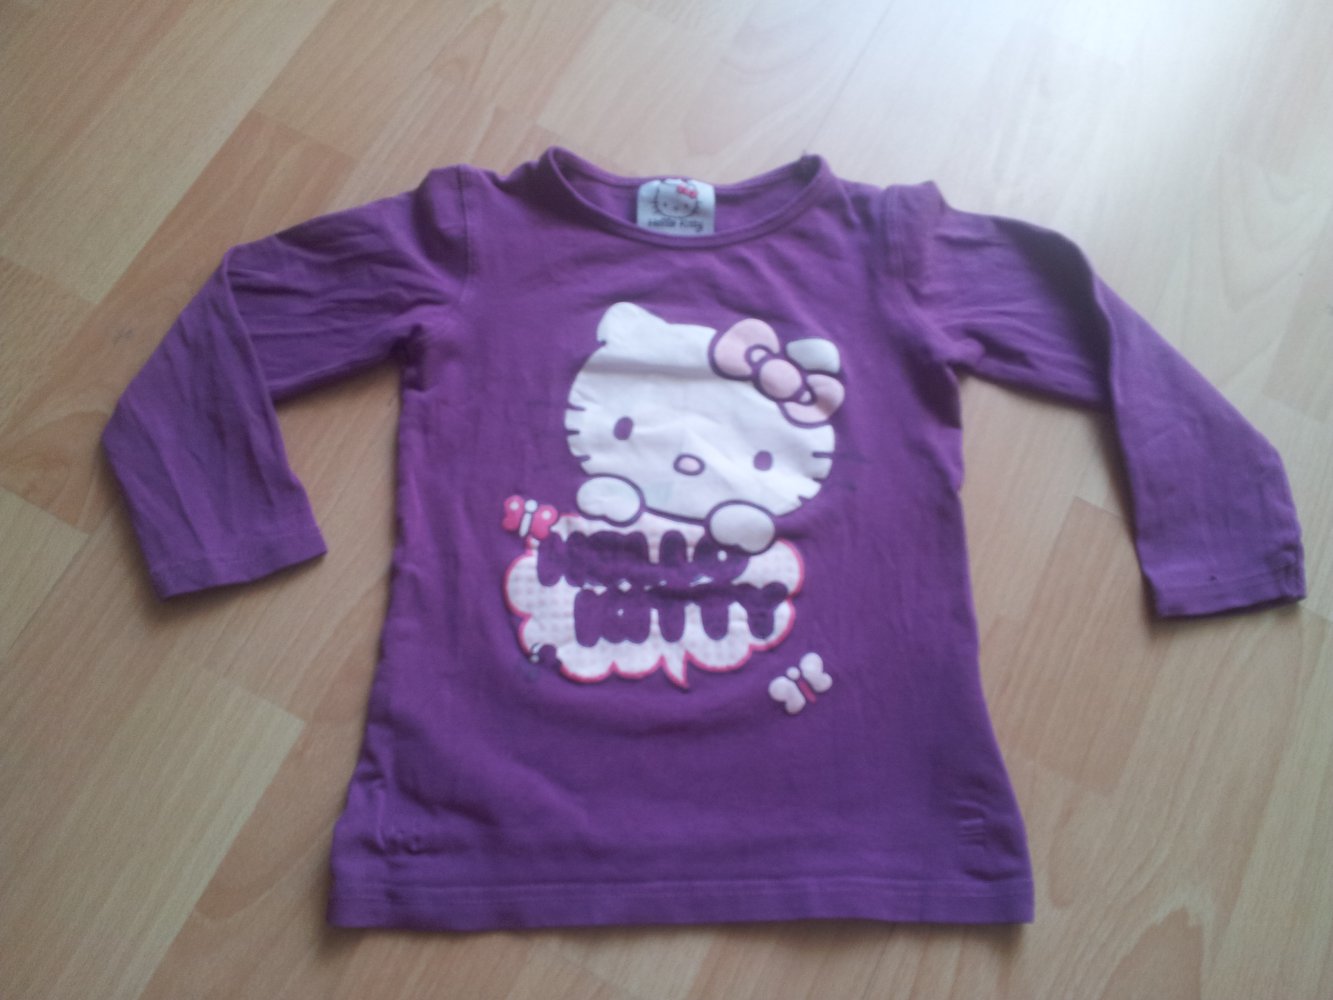  Pullover Hello Kitty lila weiß Gr. 104 